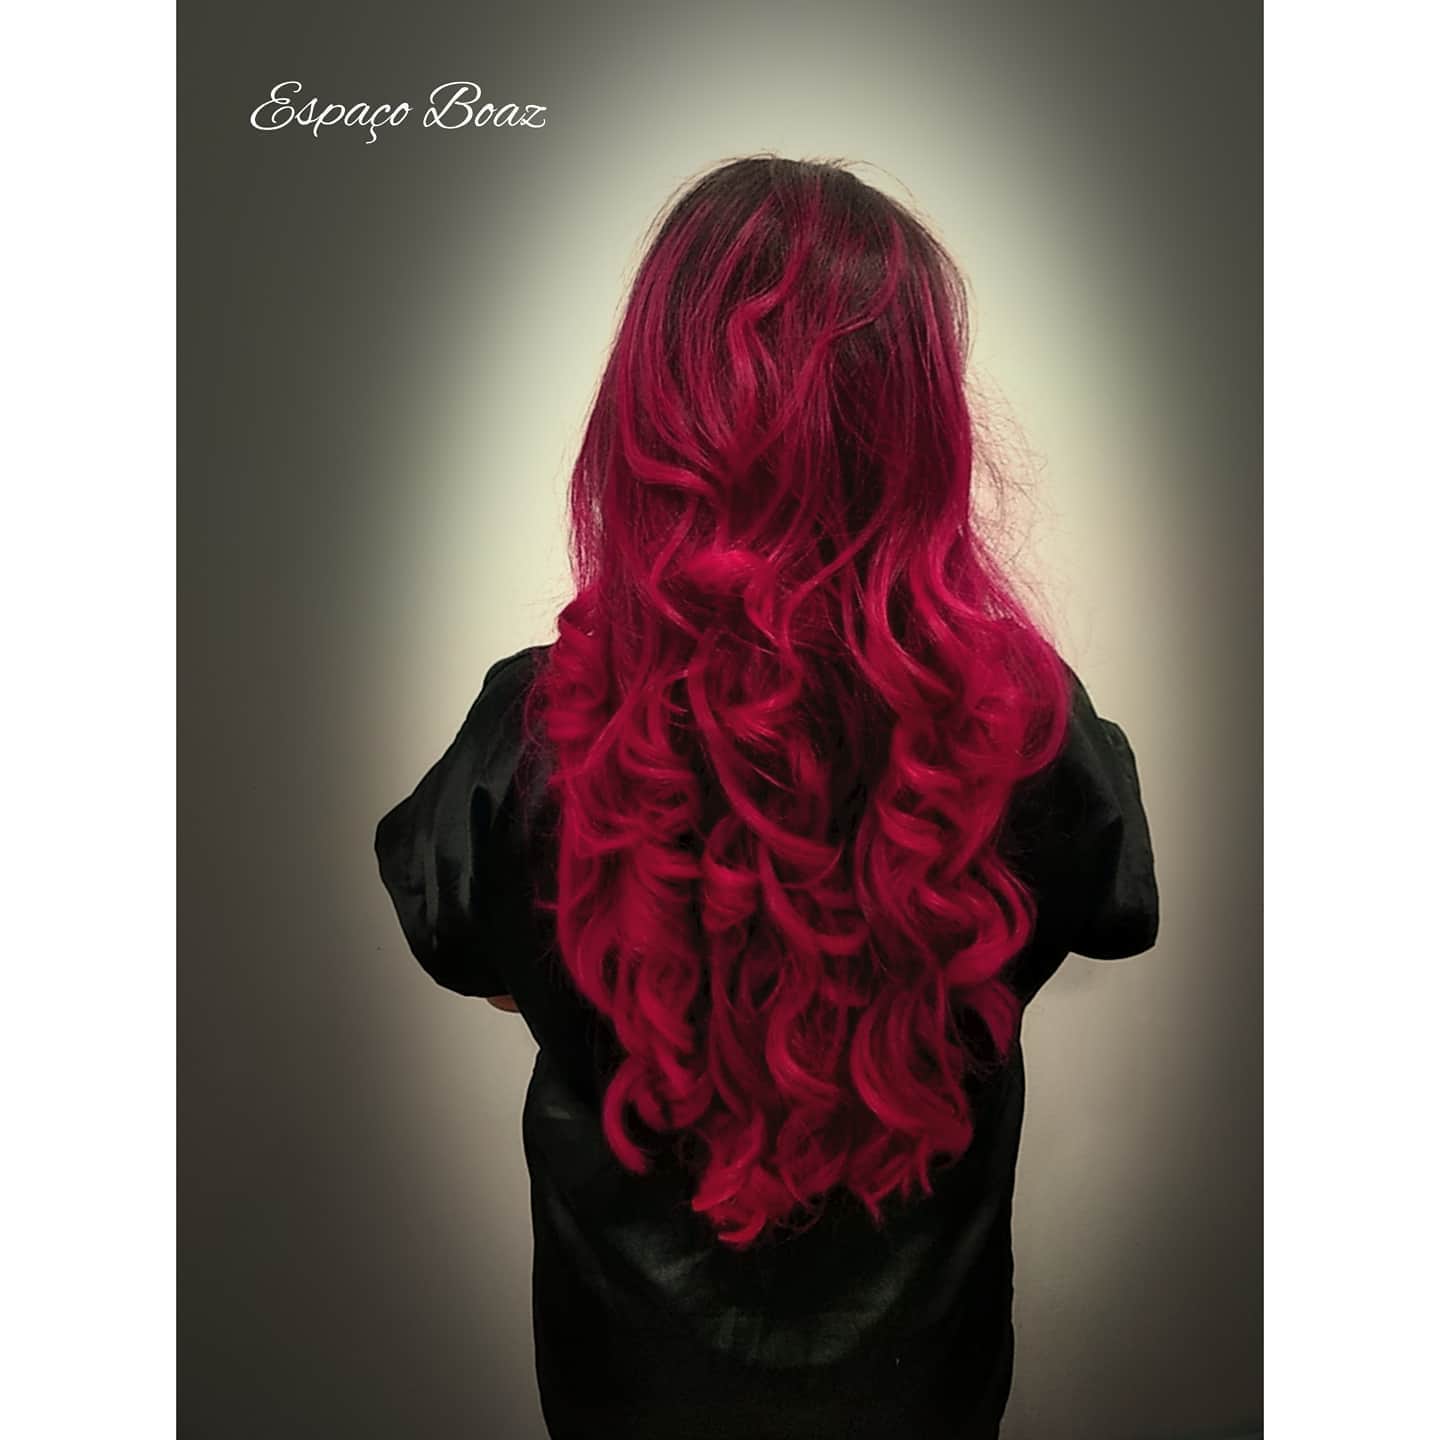 83126704 1029733970732552 4215248538604032918 n - Ombré hair rosa: 60 inspirações, trends